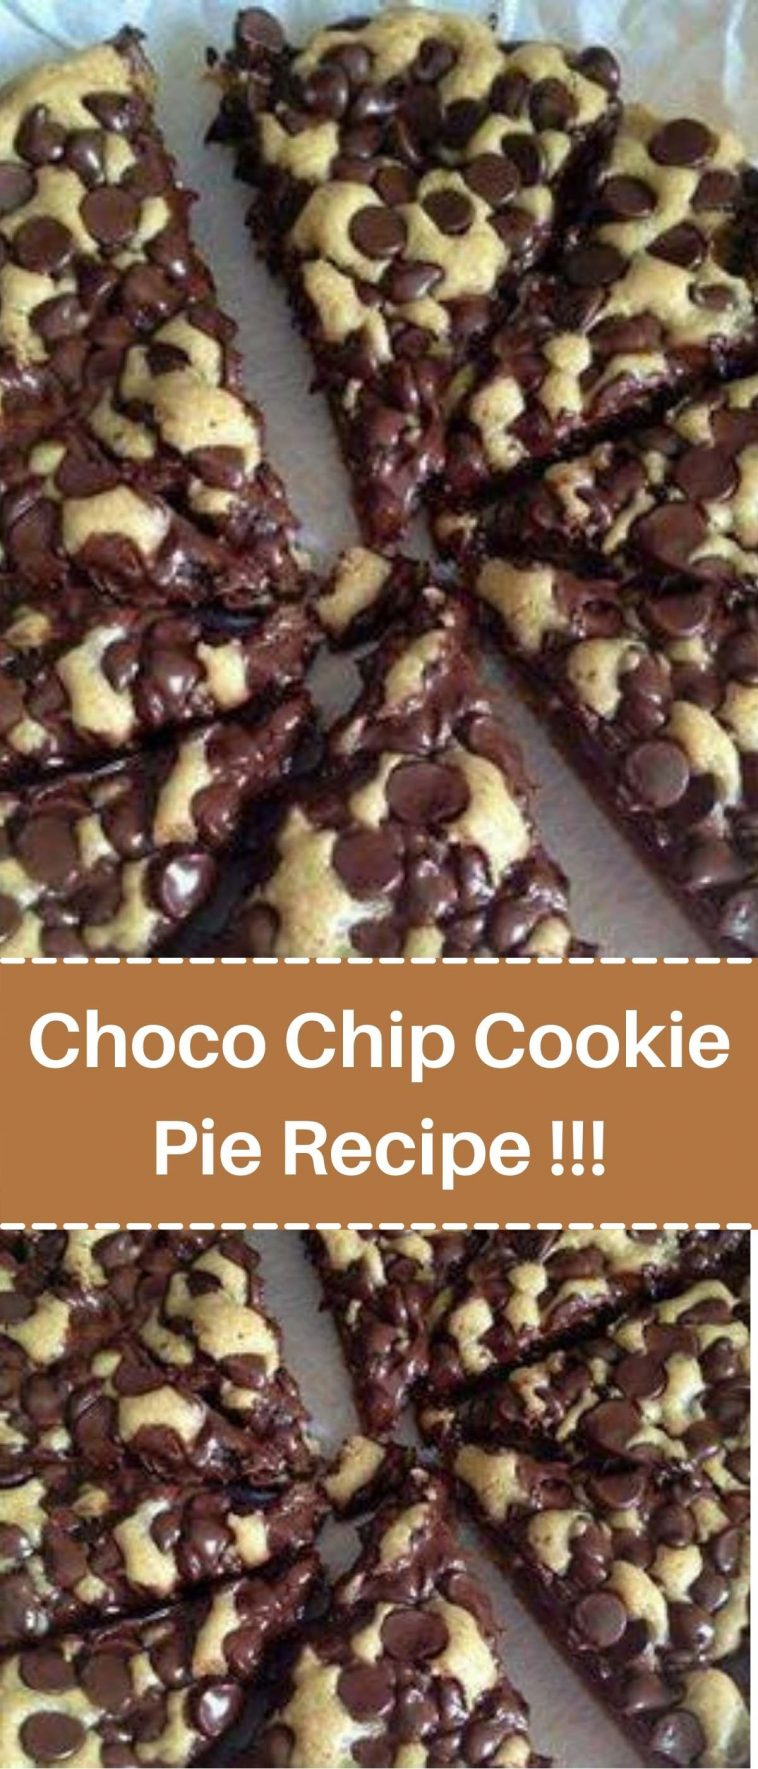 Choco Chip Cookie Pie Recipe !!!